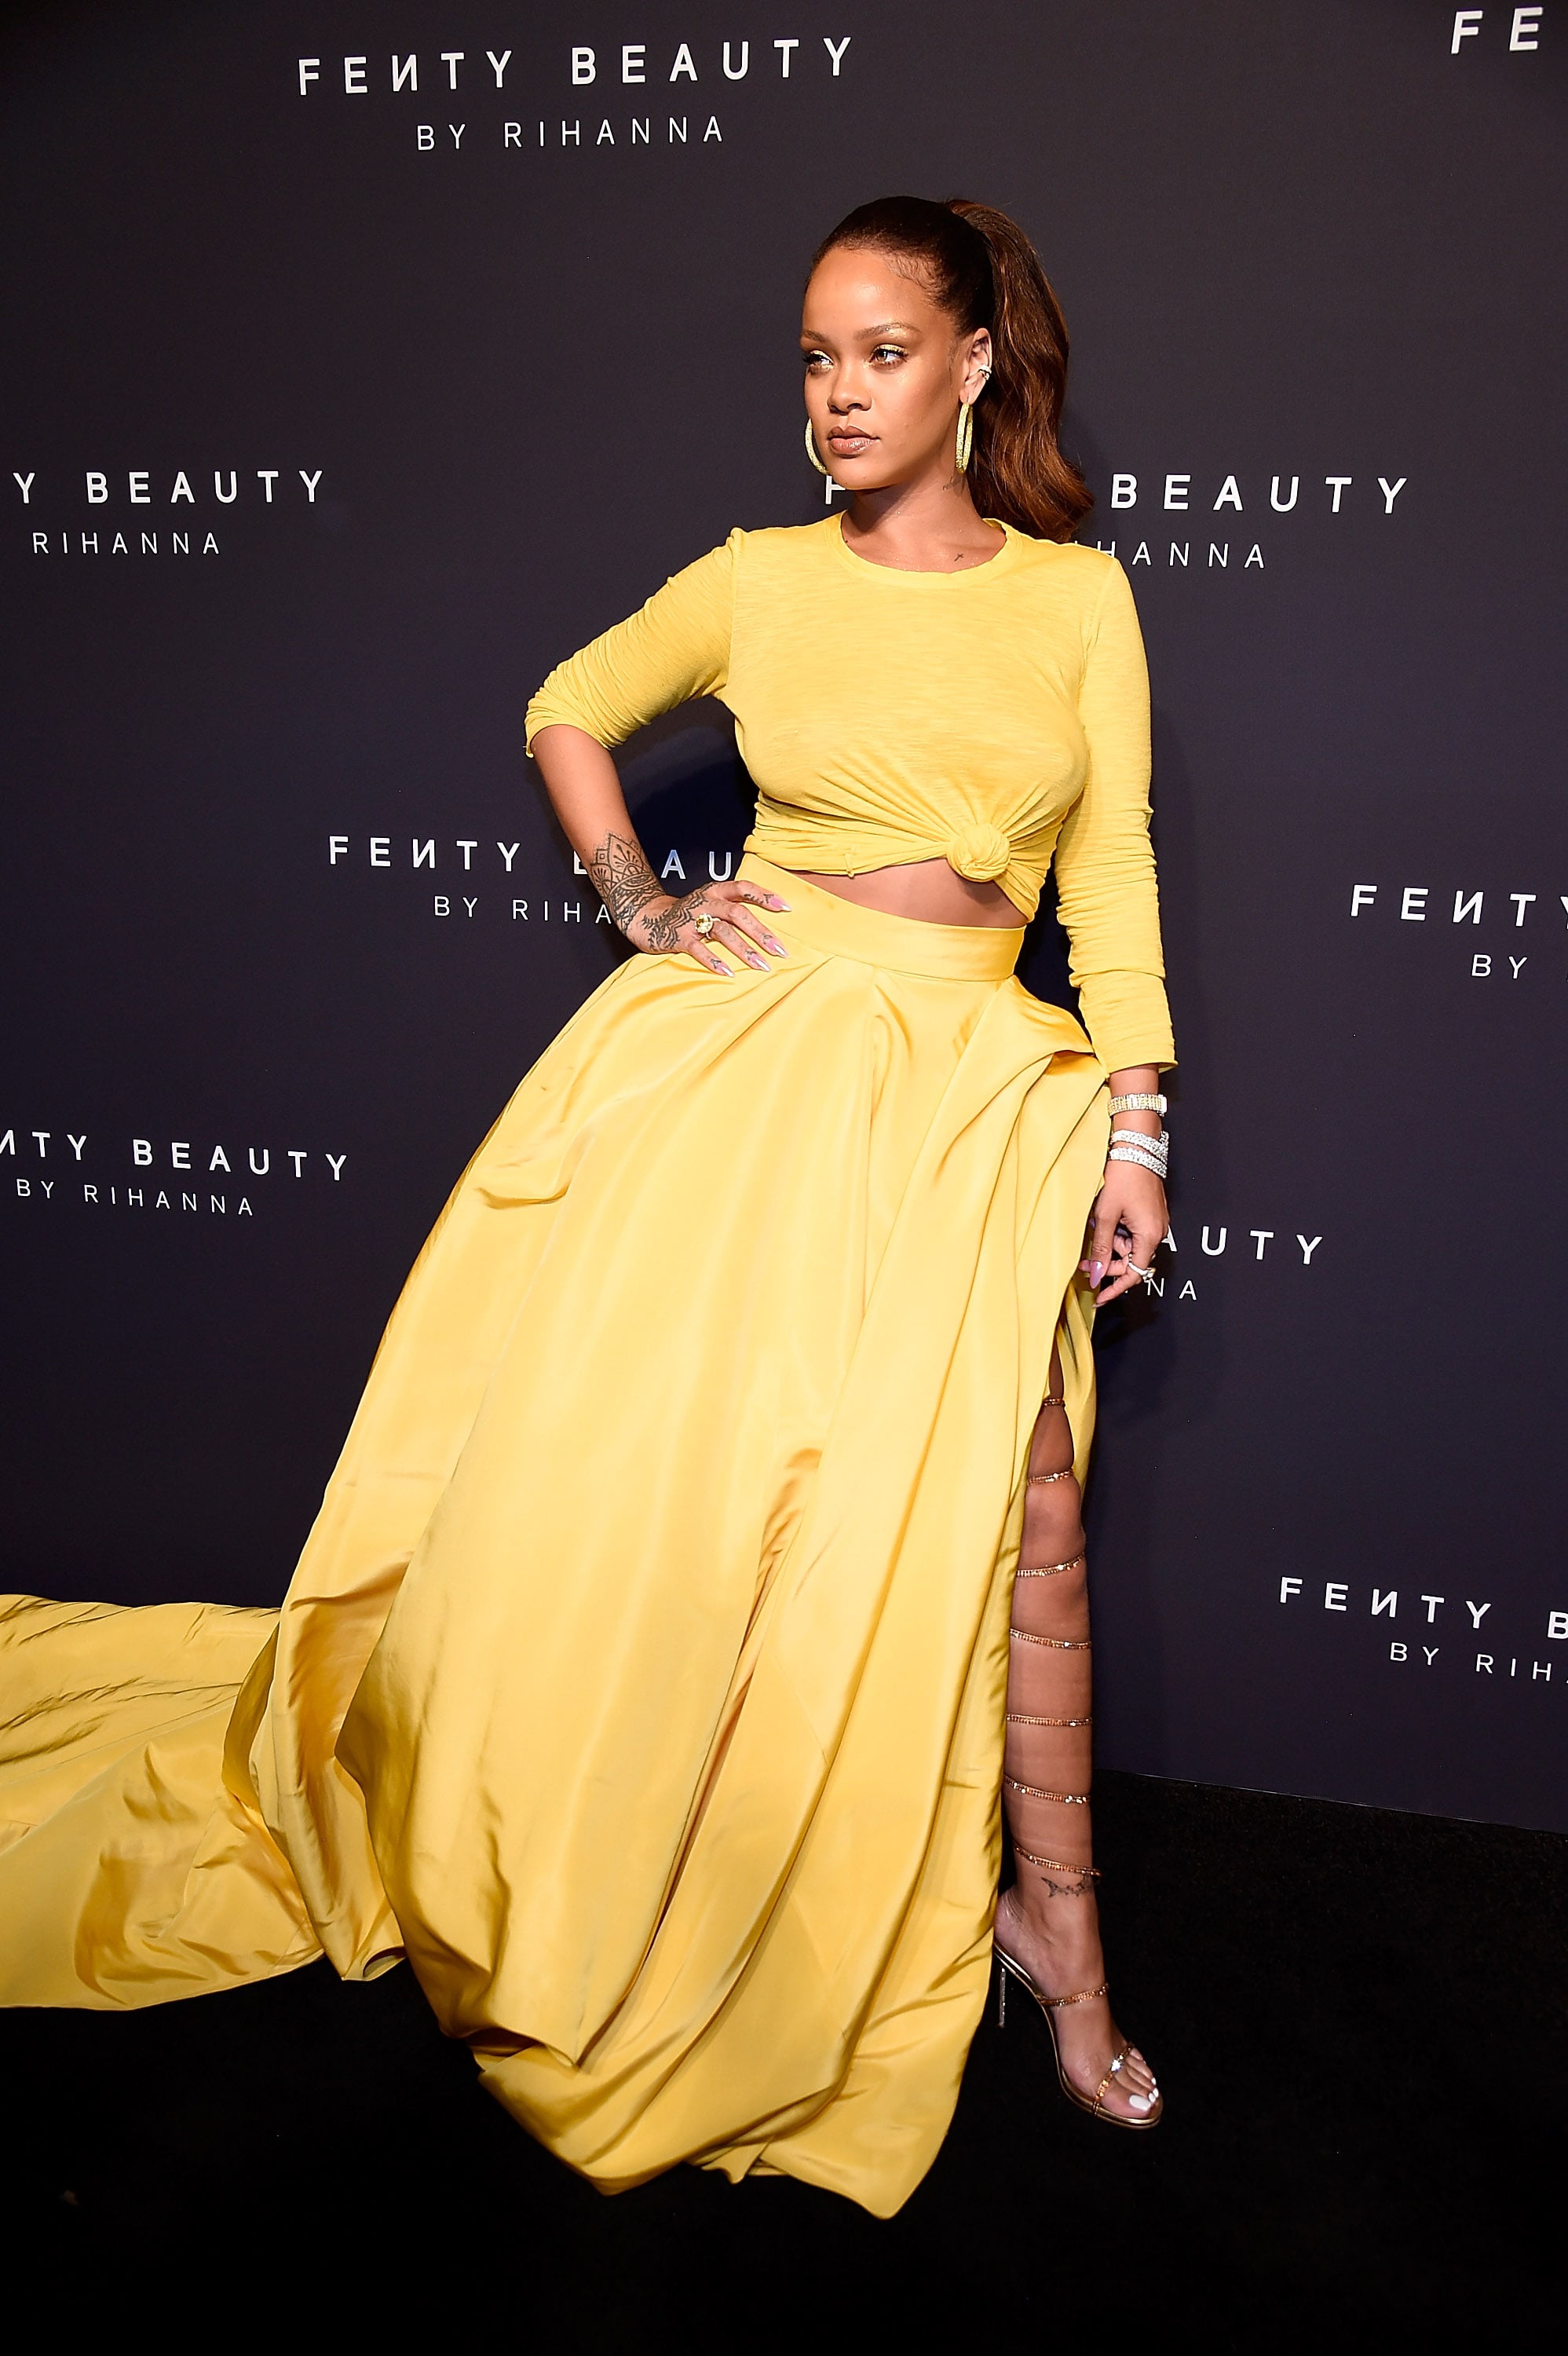 Rihanna's Yellow Oscar de la Renta Dress at Fenty Beauty